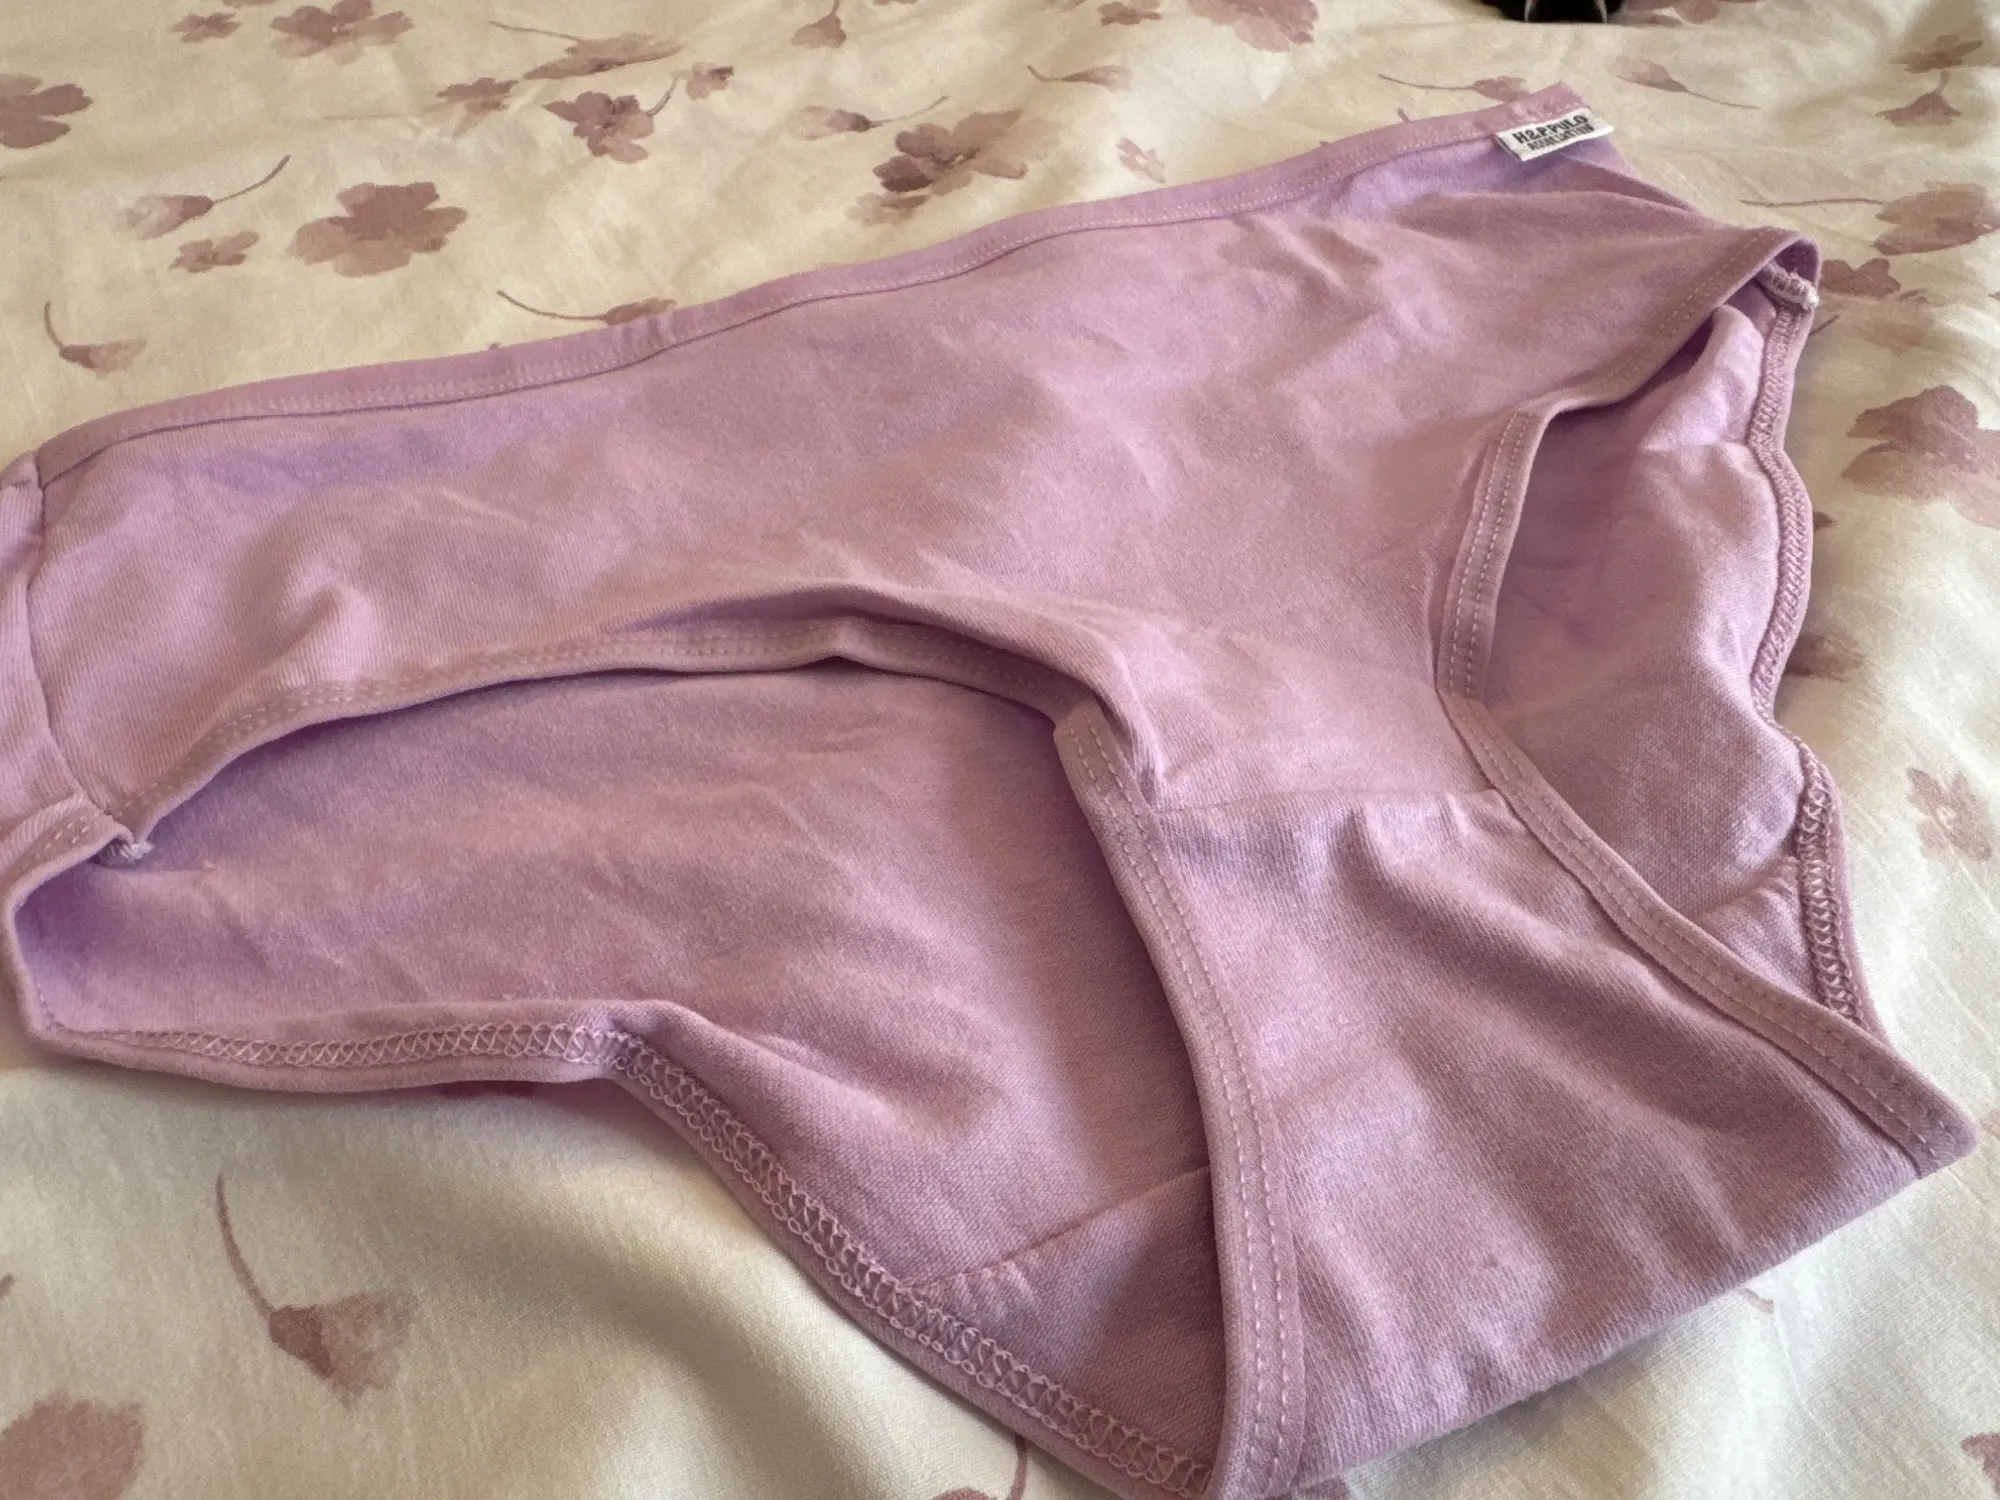 7Pcs Panties for Woman Underwear Cotton Sexy Breathable Soft Lingerie Female Briefs Girls Cute Solid Color Underpants Large Size photo review